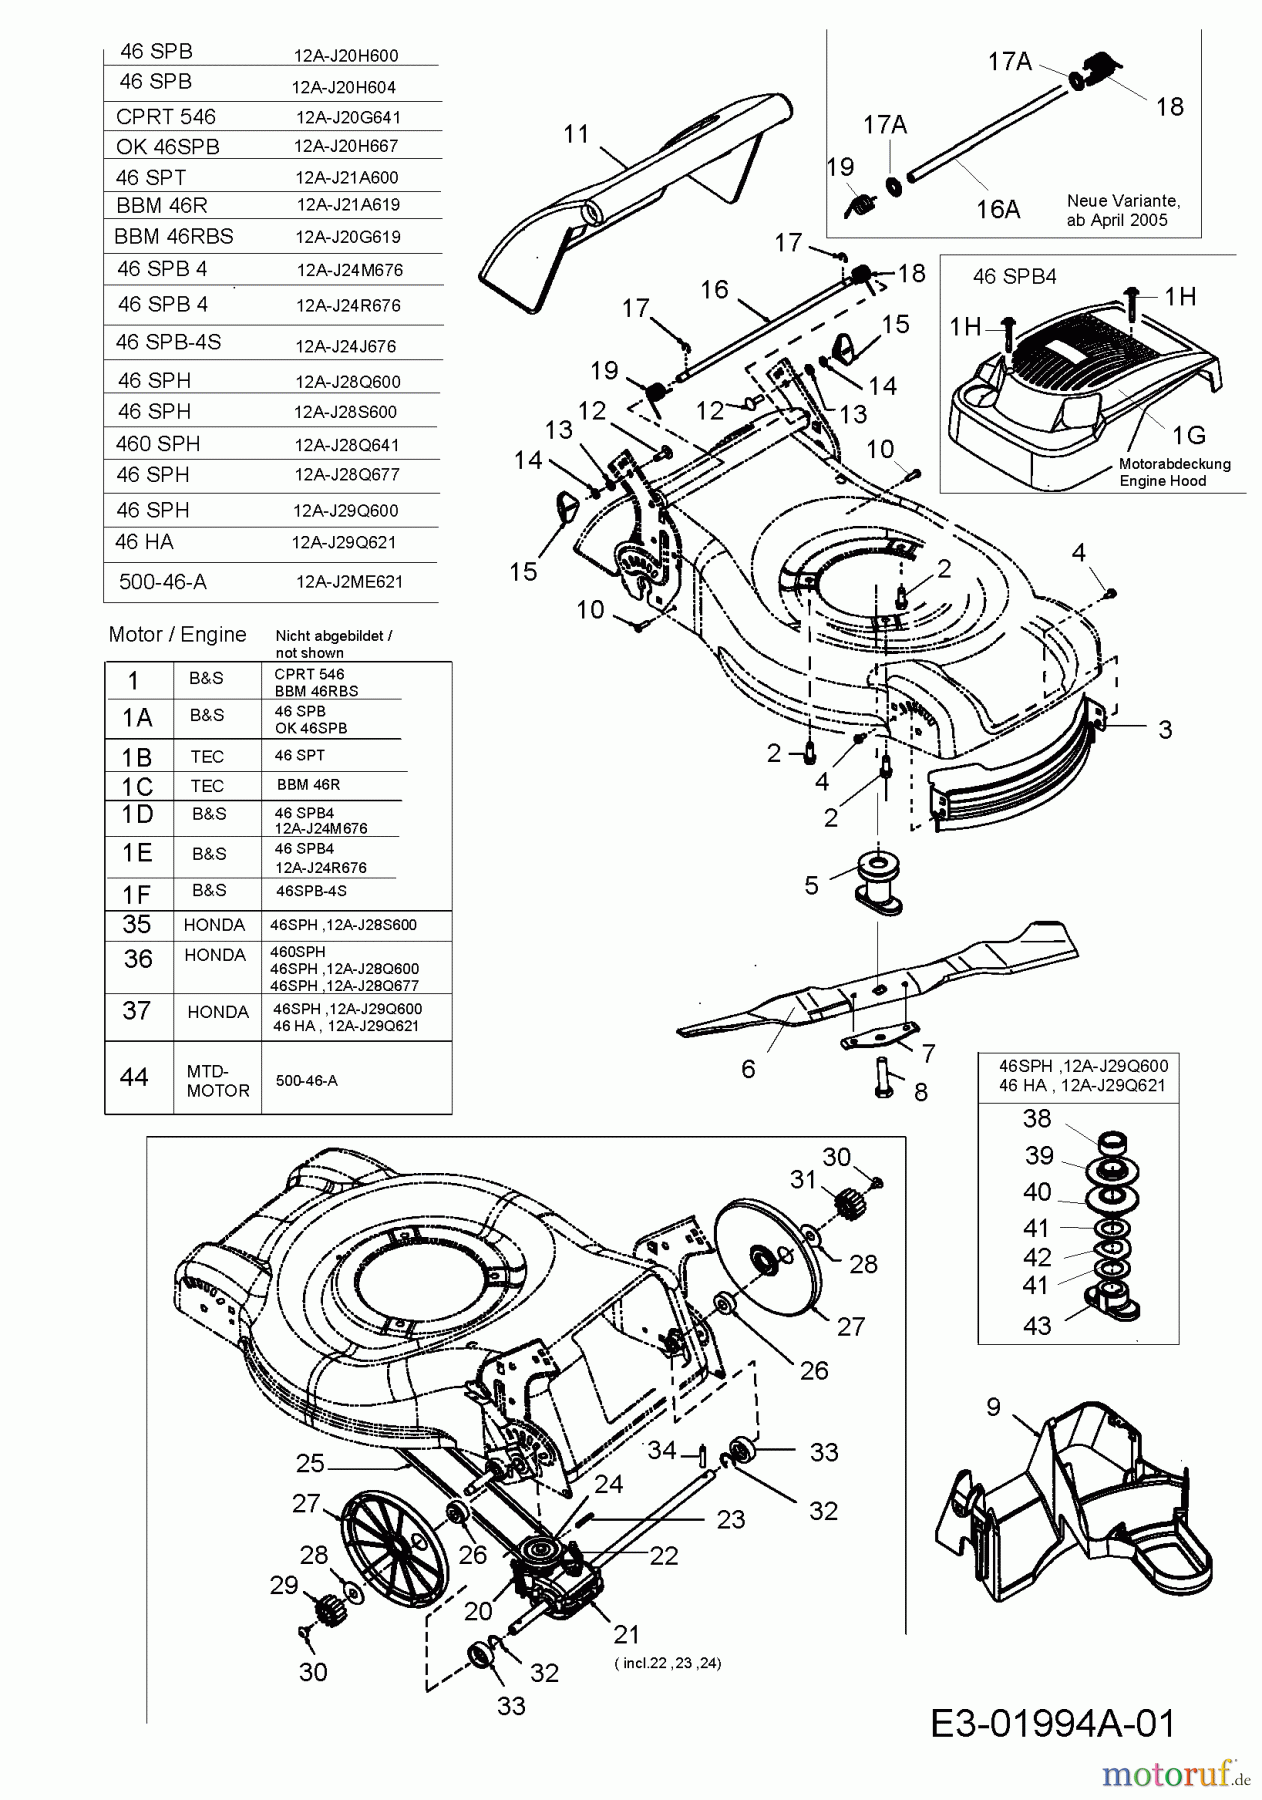  Budget Motormäher mit Antrieb BBM 46 RBS 12A-J20G619  (2005) Getriebe, Messer, Motor